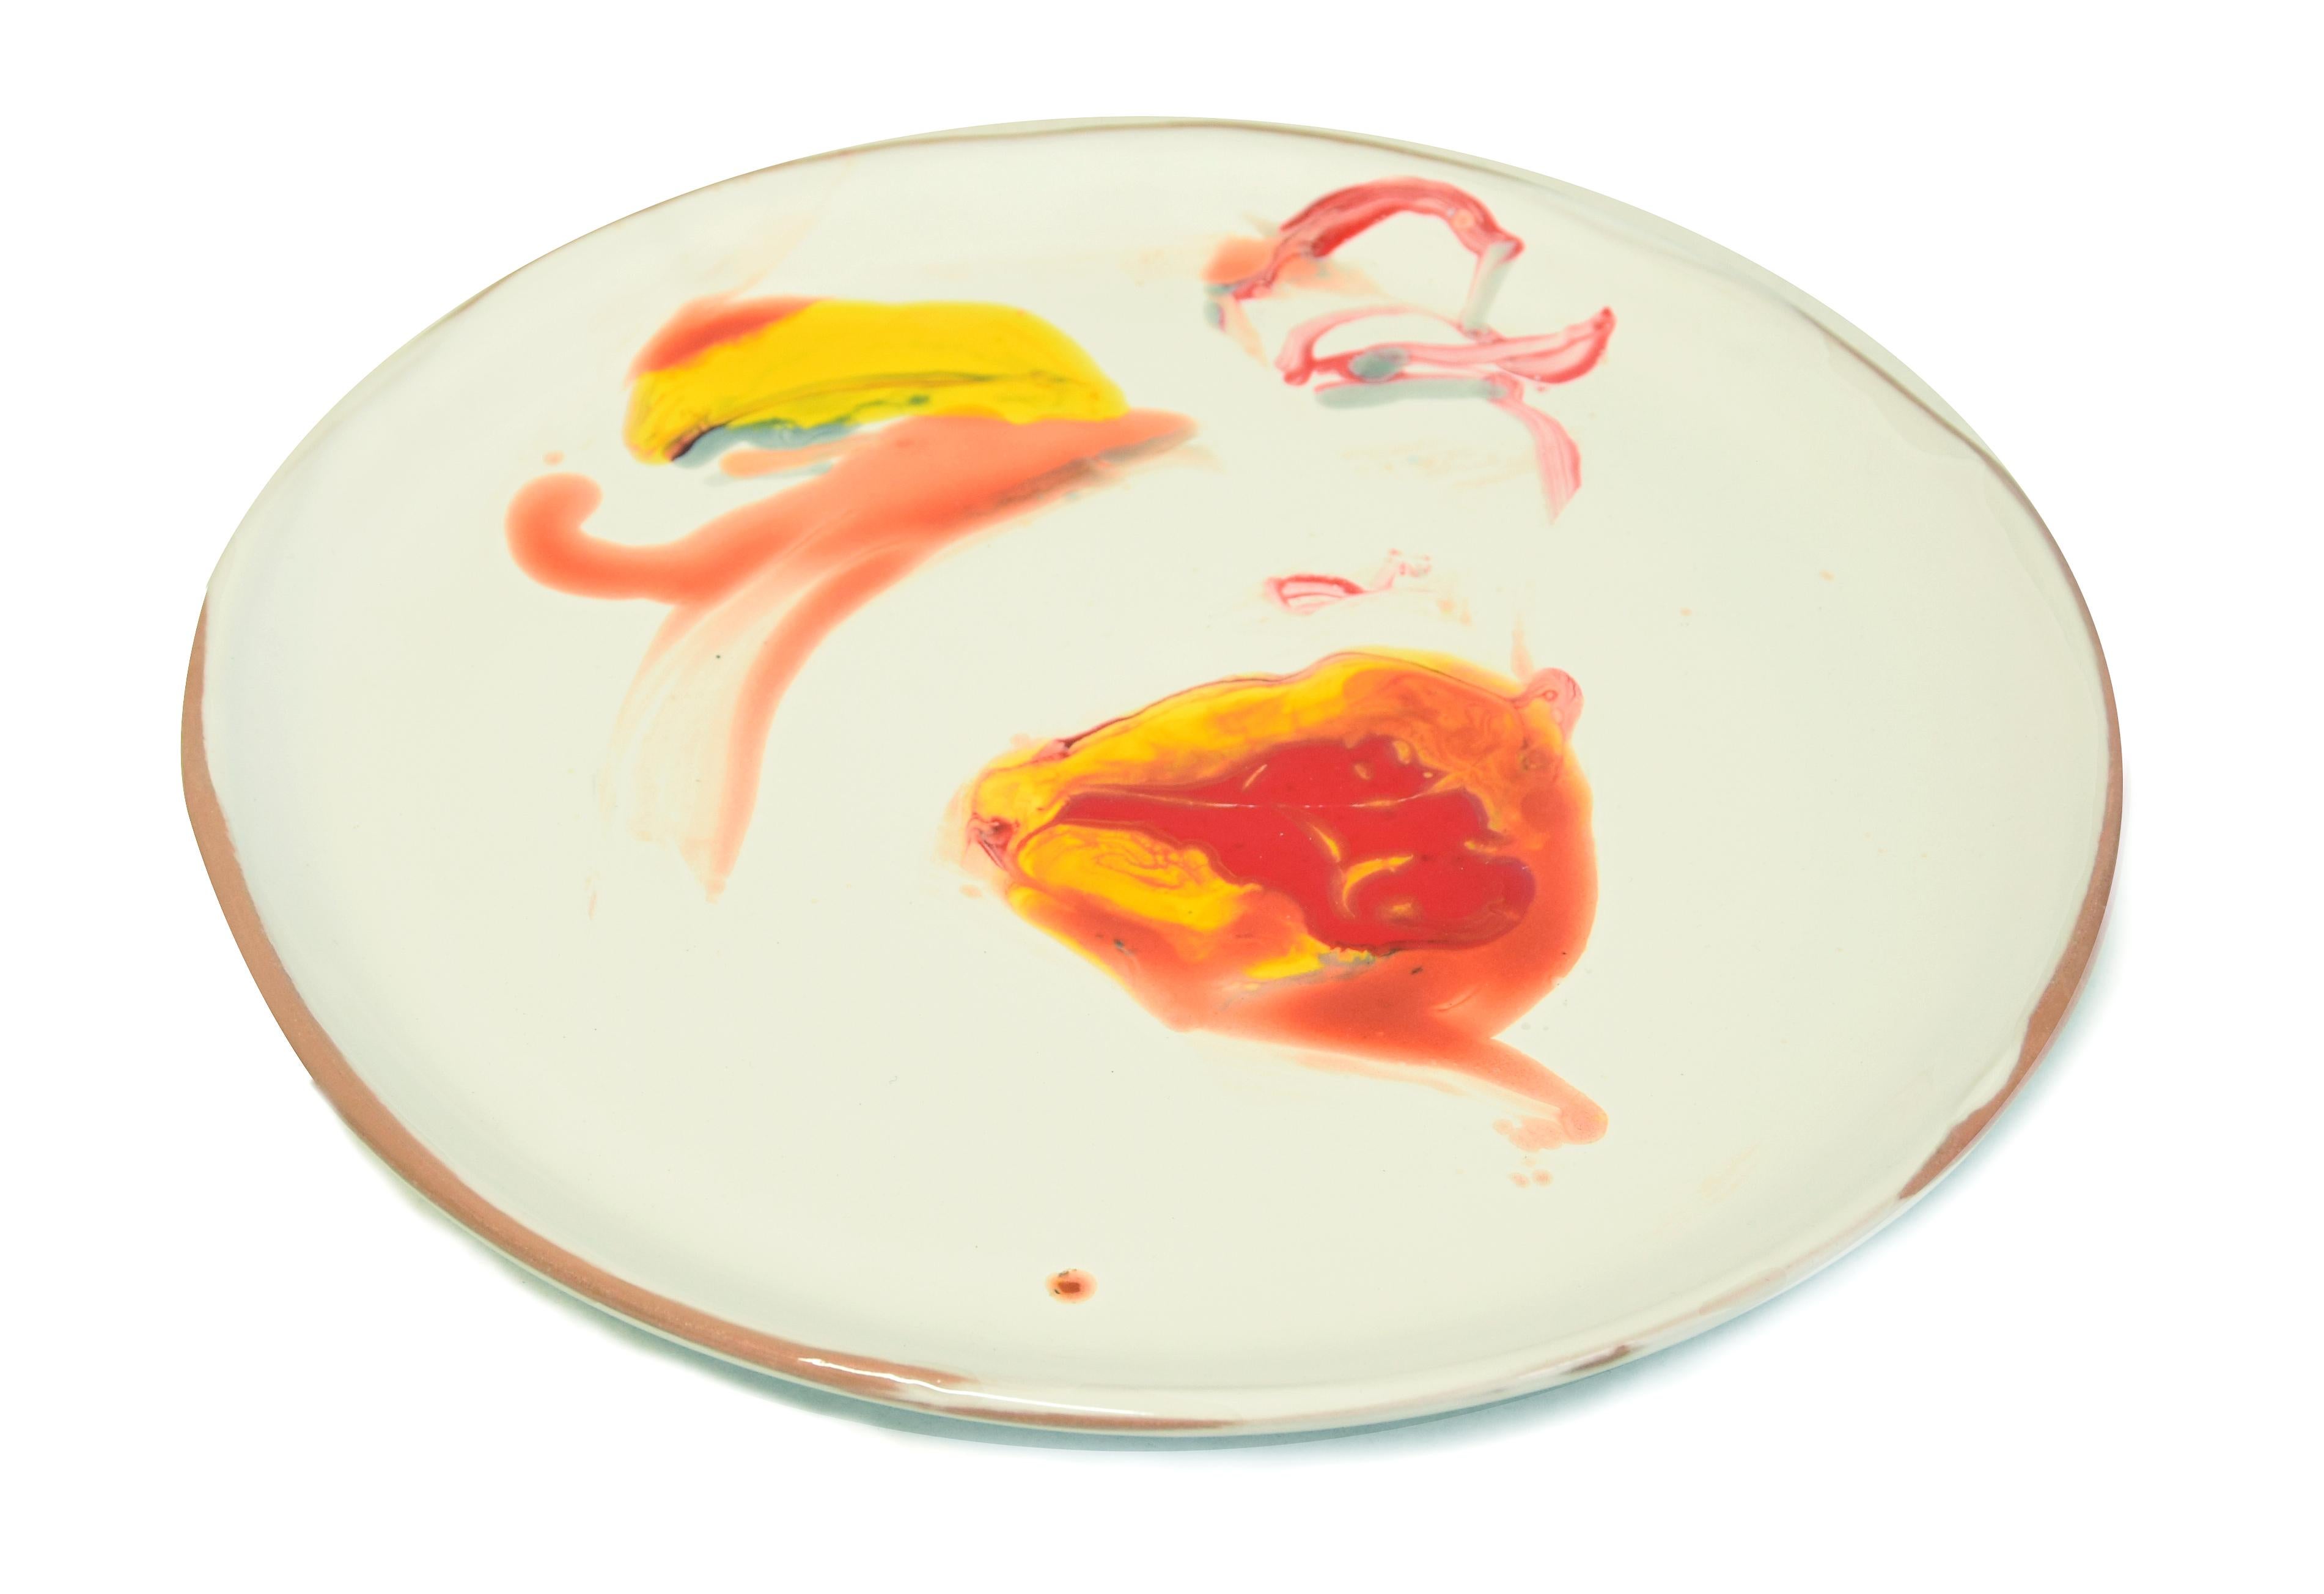 Sight - Hand-made Flat Ceramic Dish by A. Kurakina - 2019